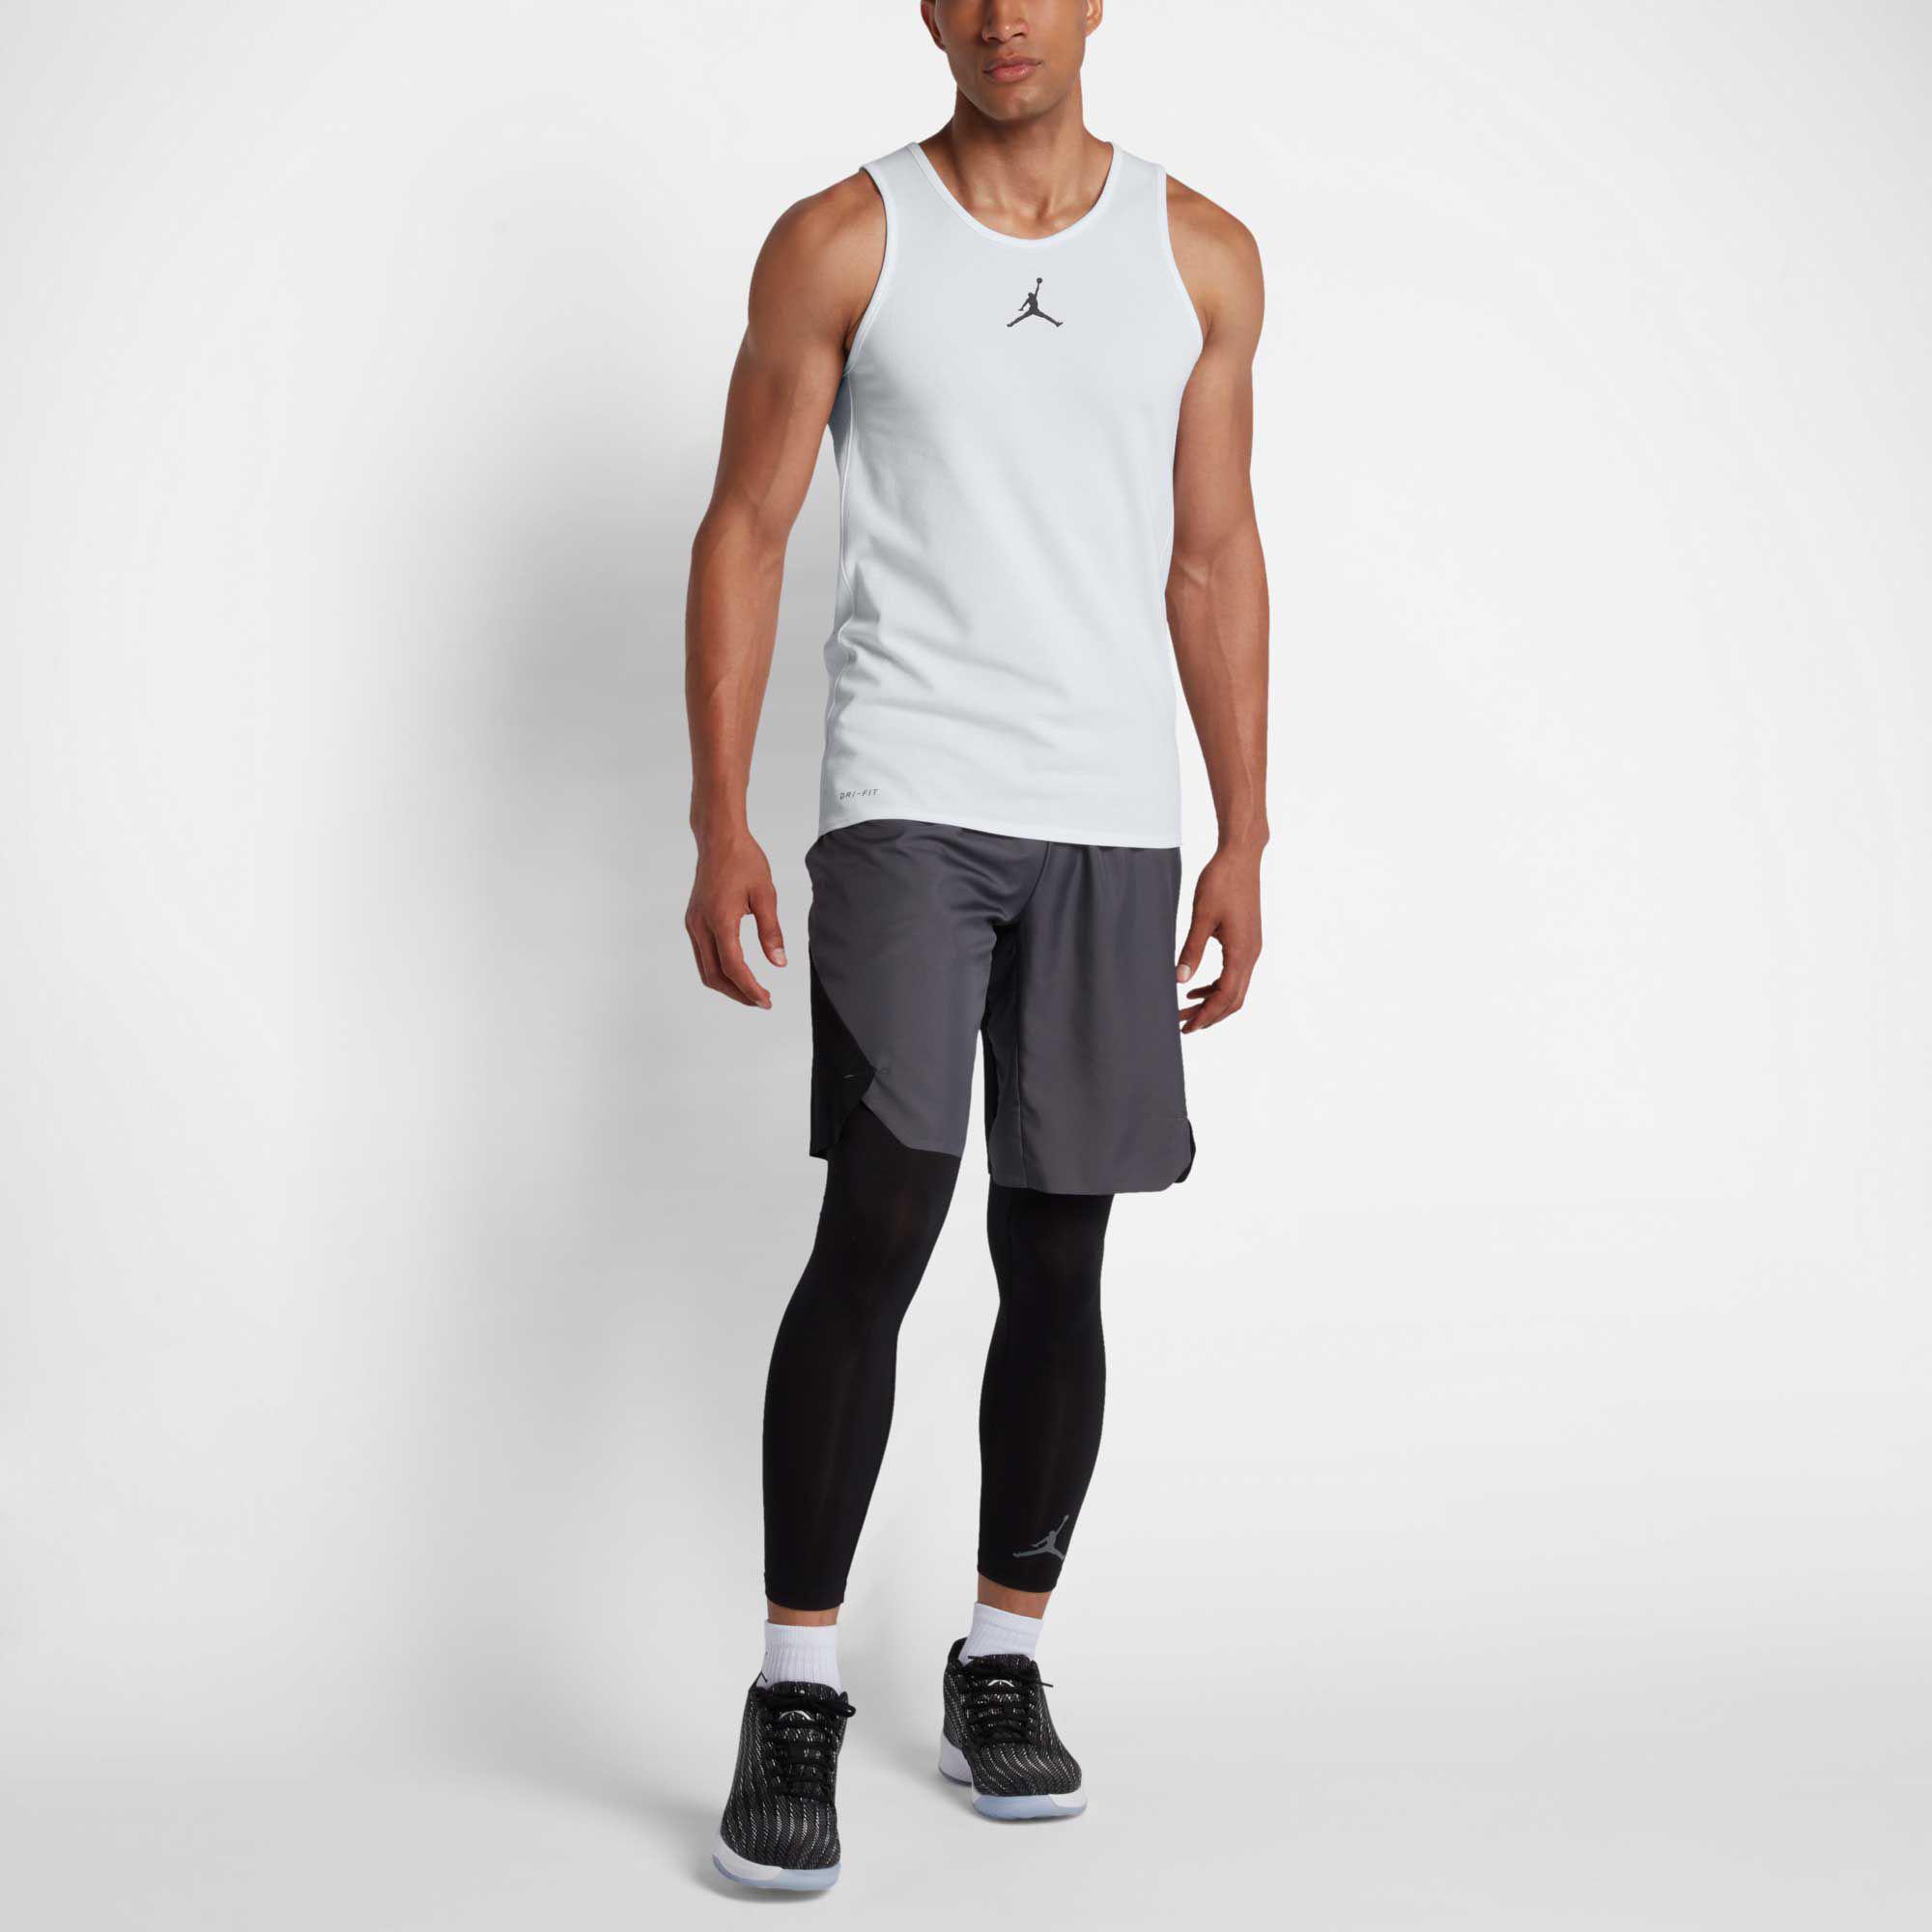 Nike Jordan Rise Dri-fit Basketball Tank Top in White/Black (White) for Men  - Lyst